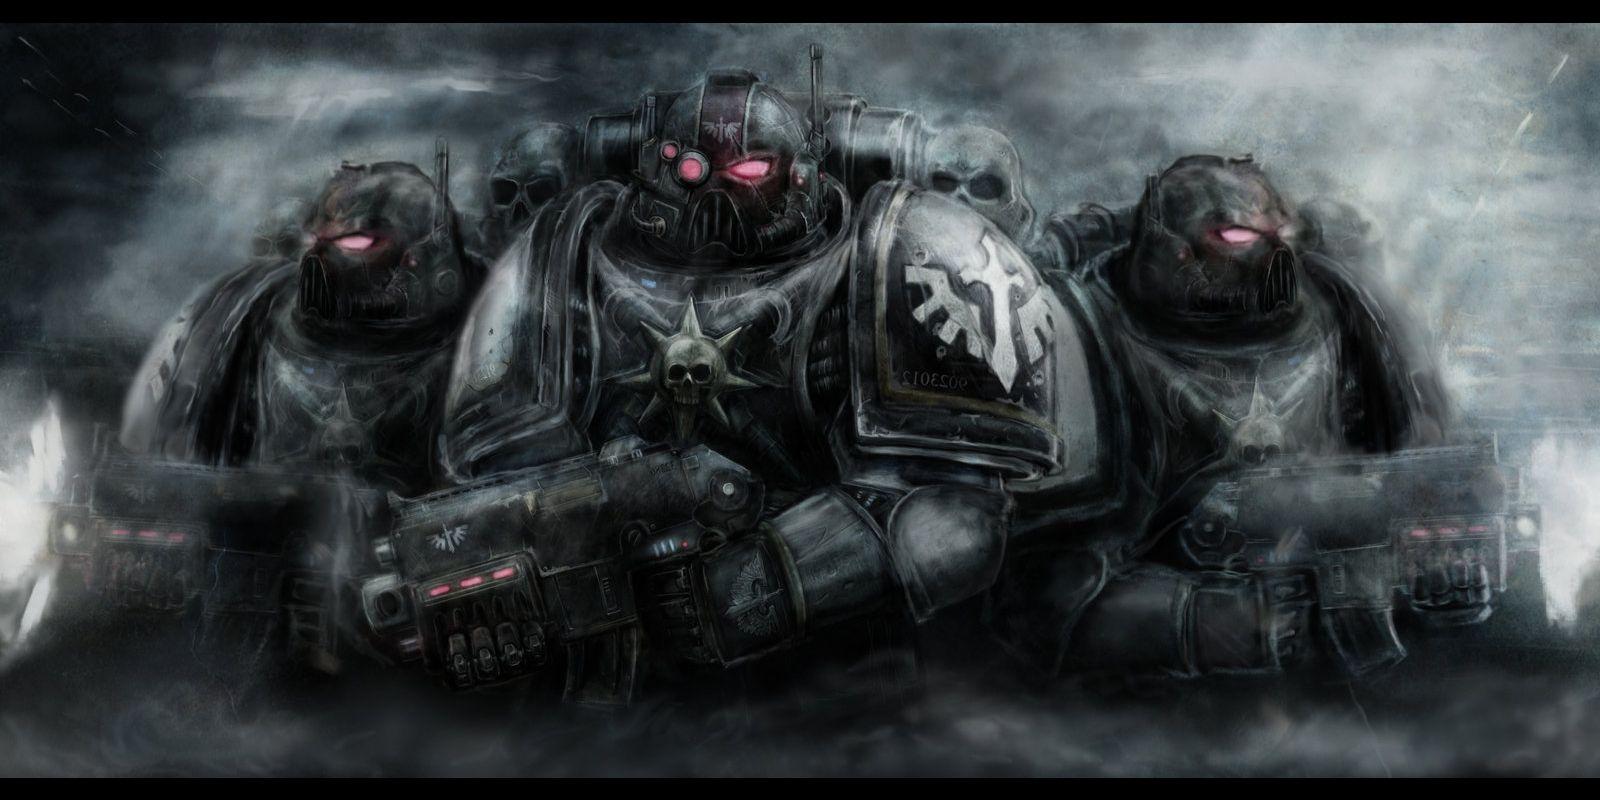 Warhammer 000: Dawn of War III HD Wallpaper and Background